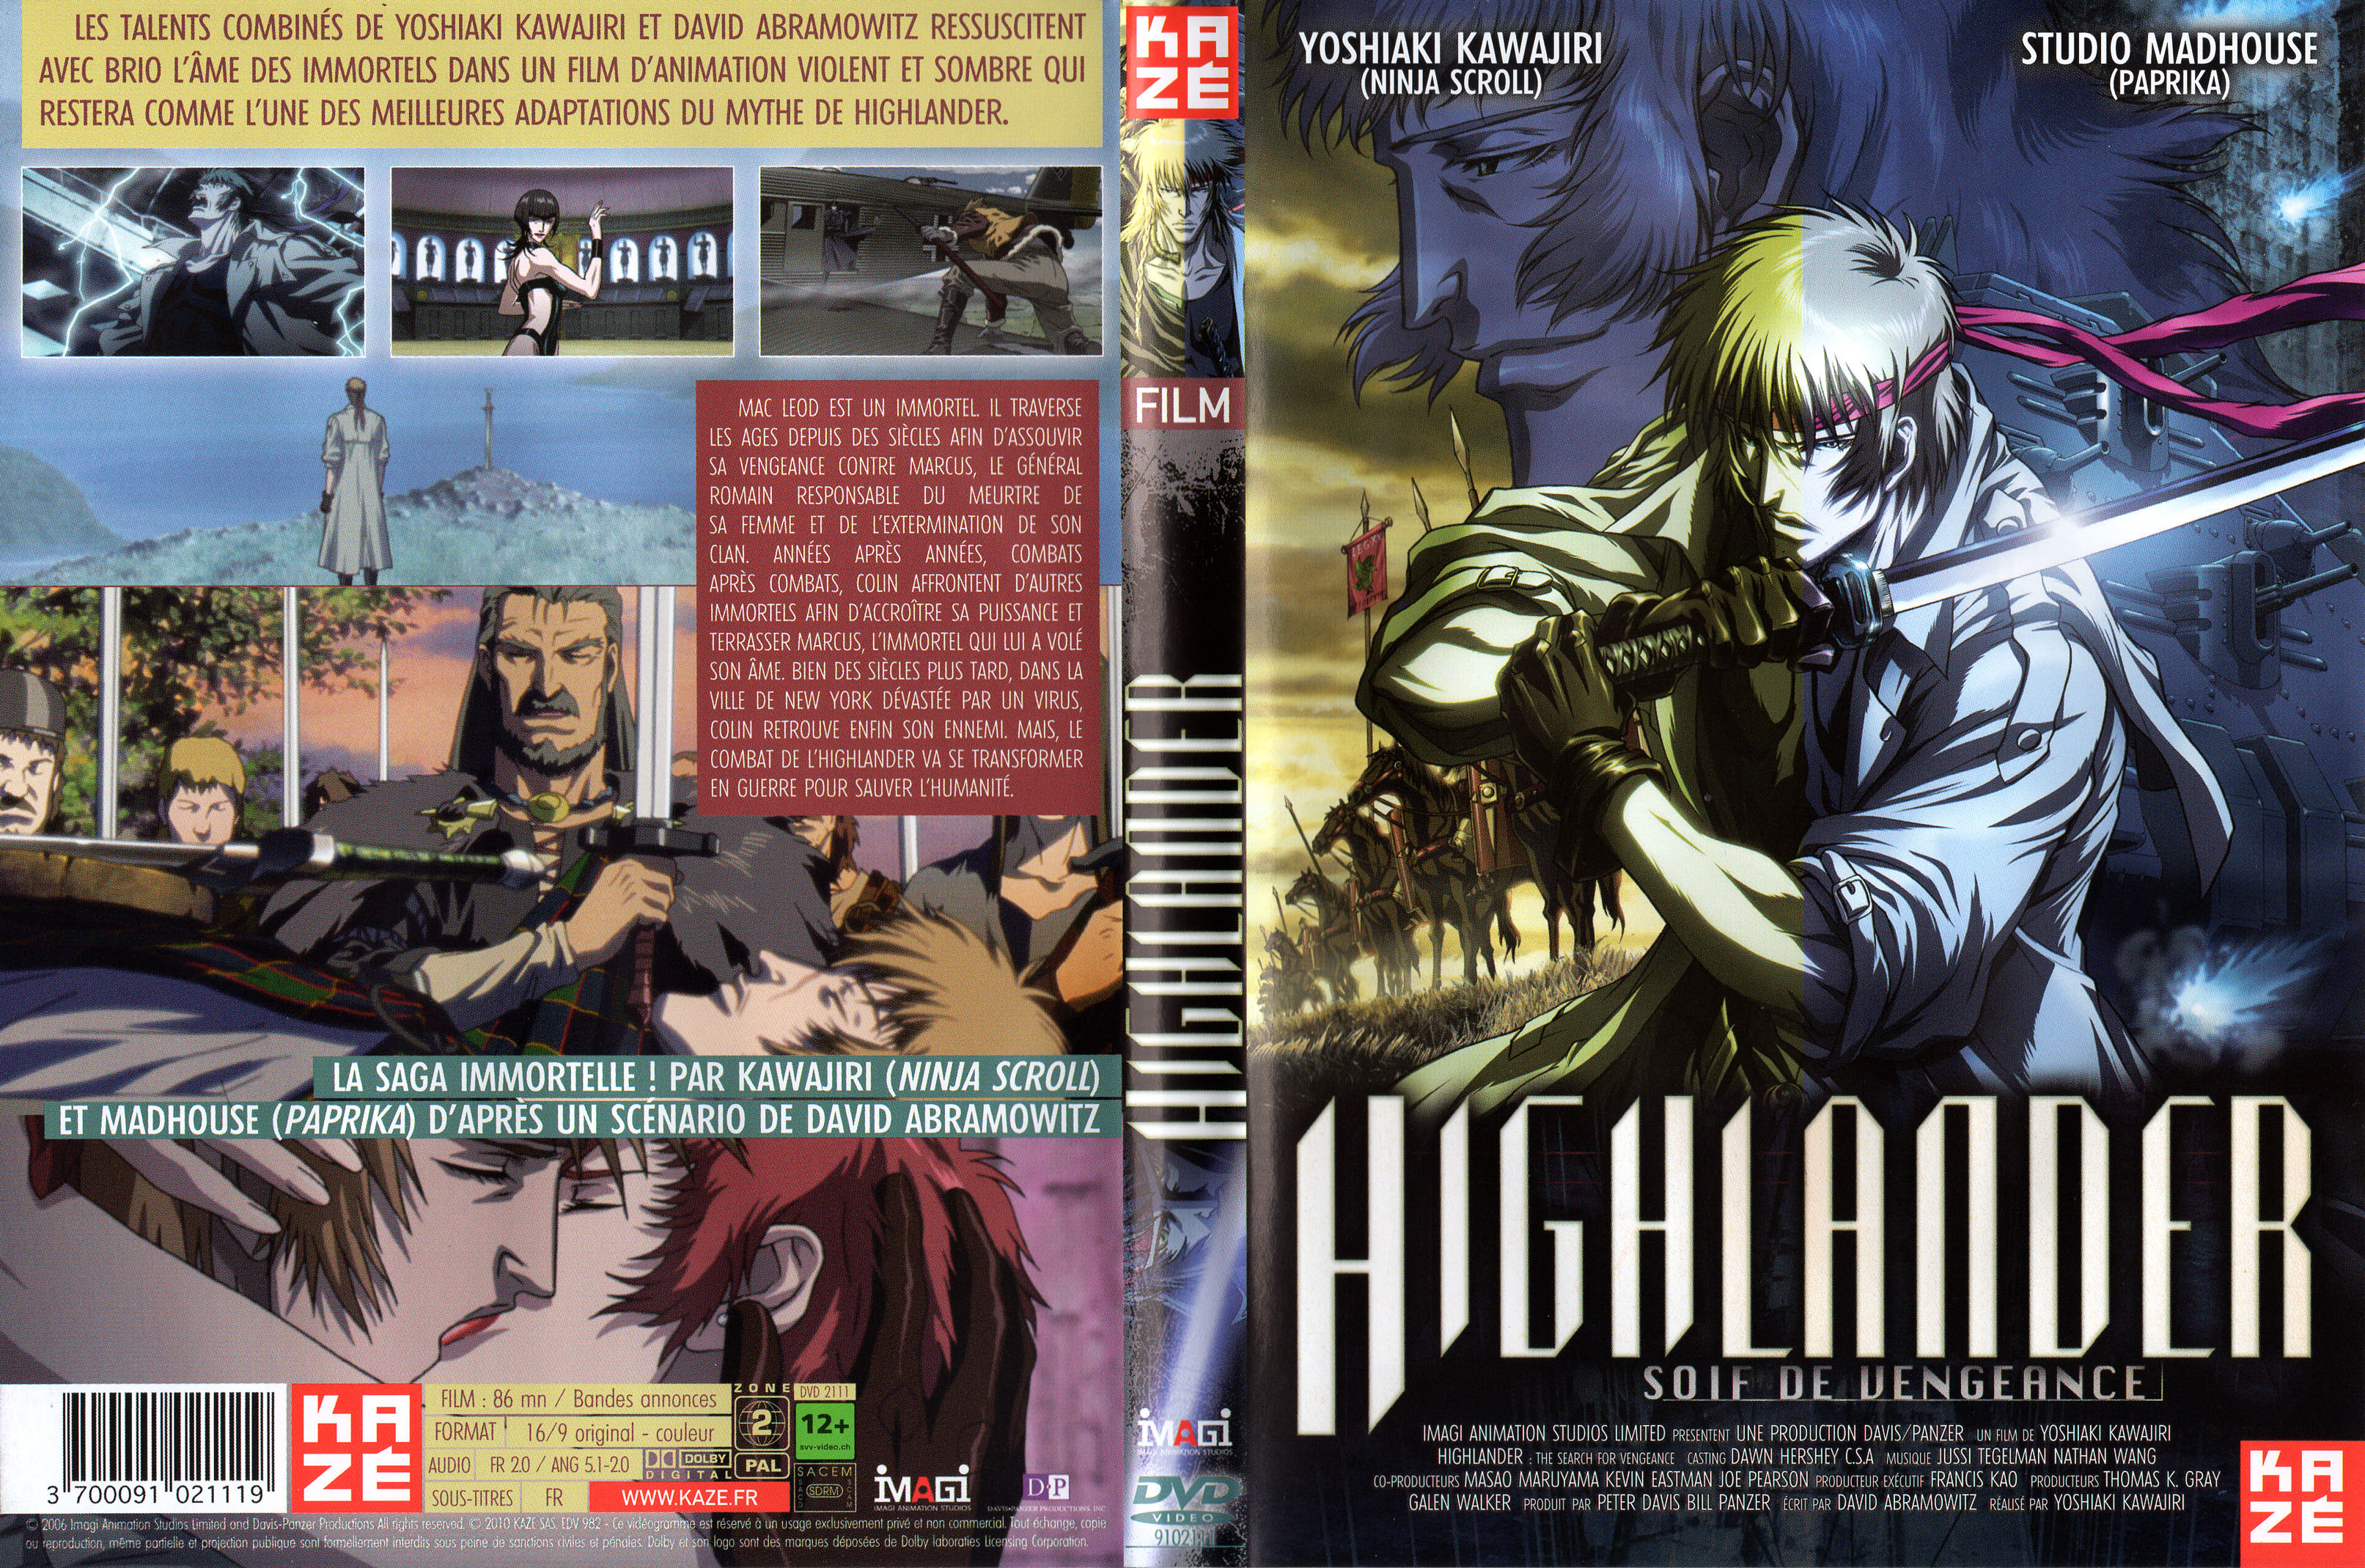 Jaquette DVD Highlander - soif de vengeance